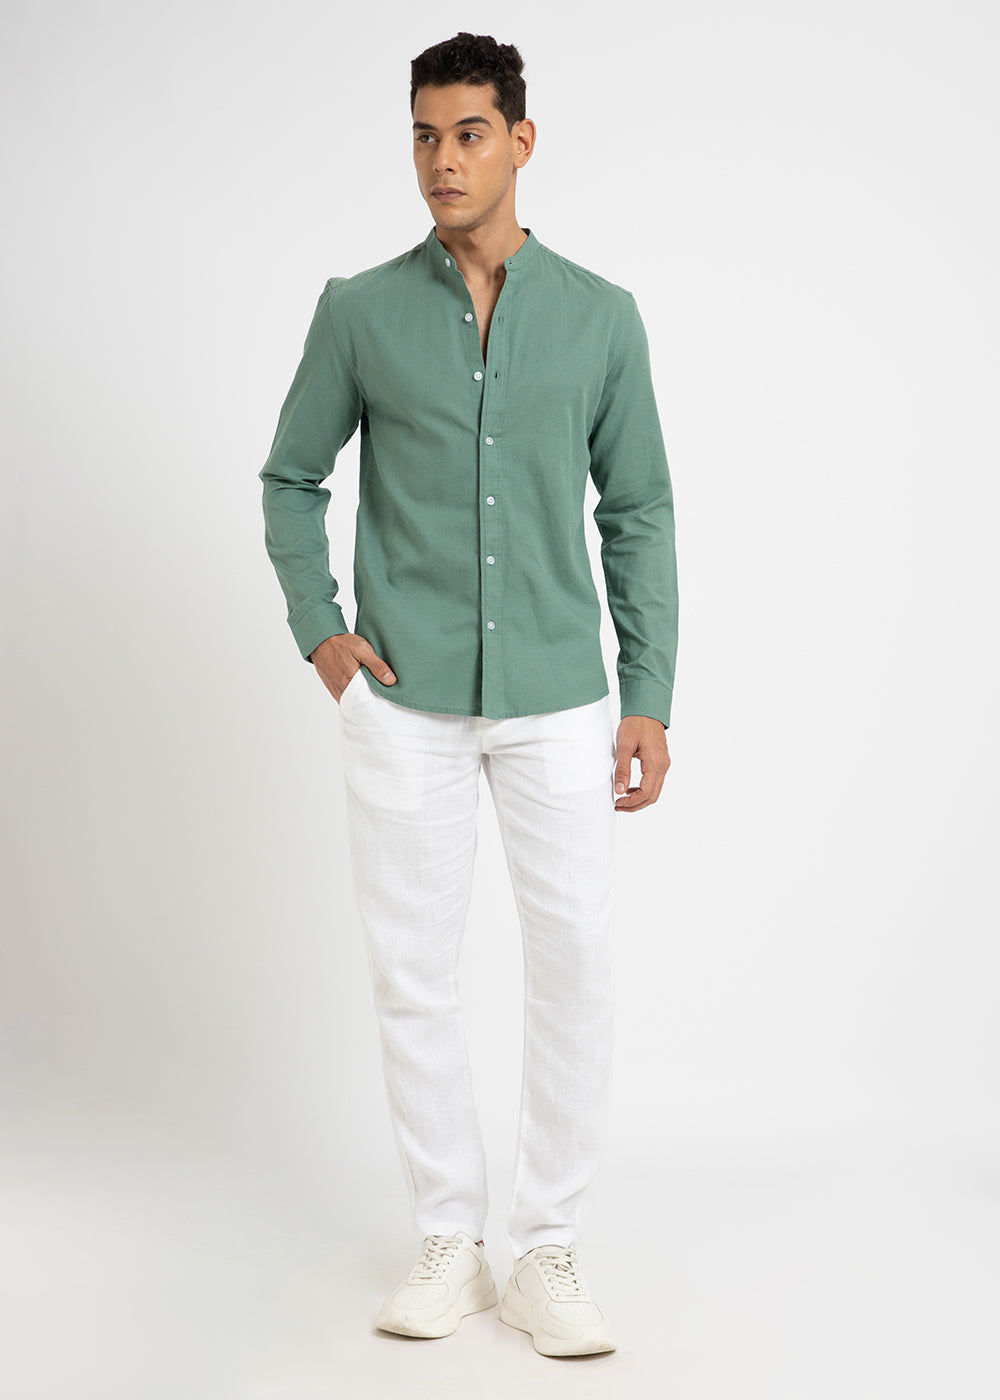 Atlantis Green Cotton Linen Shirt